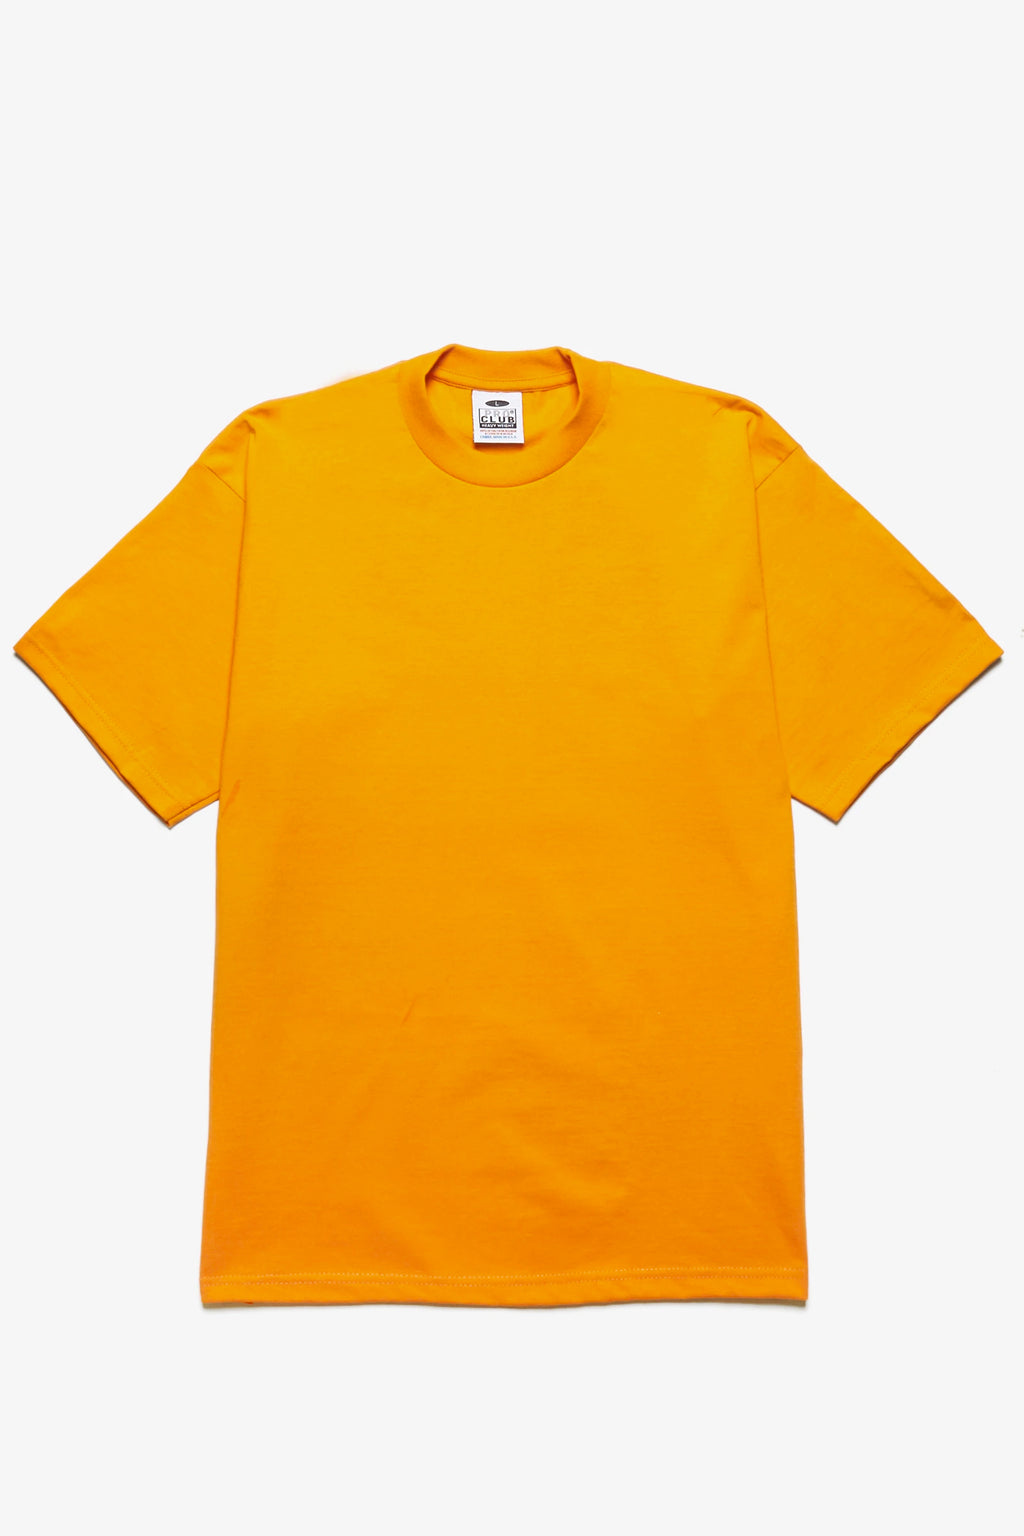 Pro Club - Heavyweight T-Shirt - Sunflower